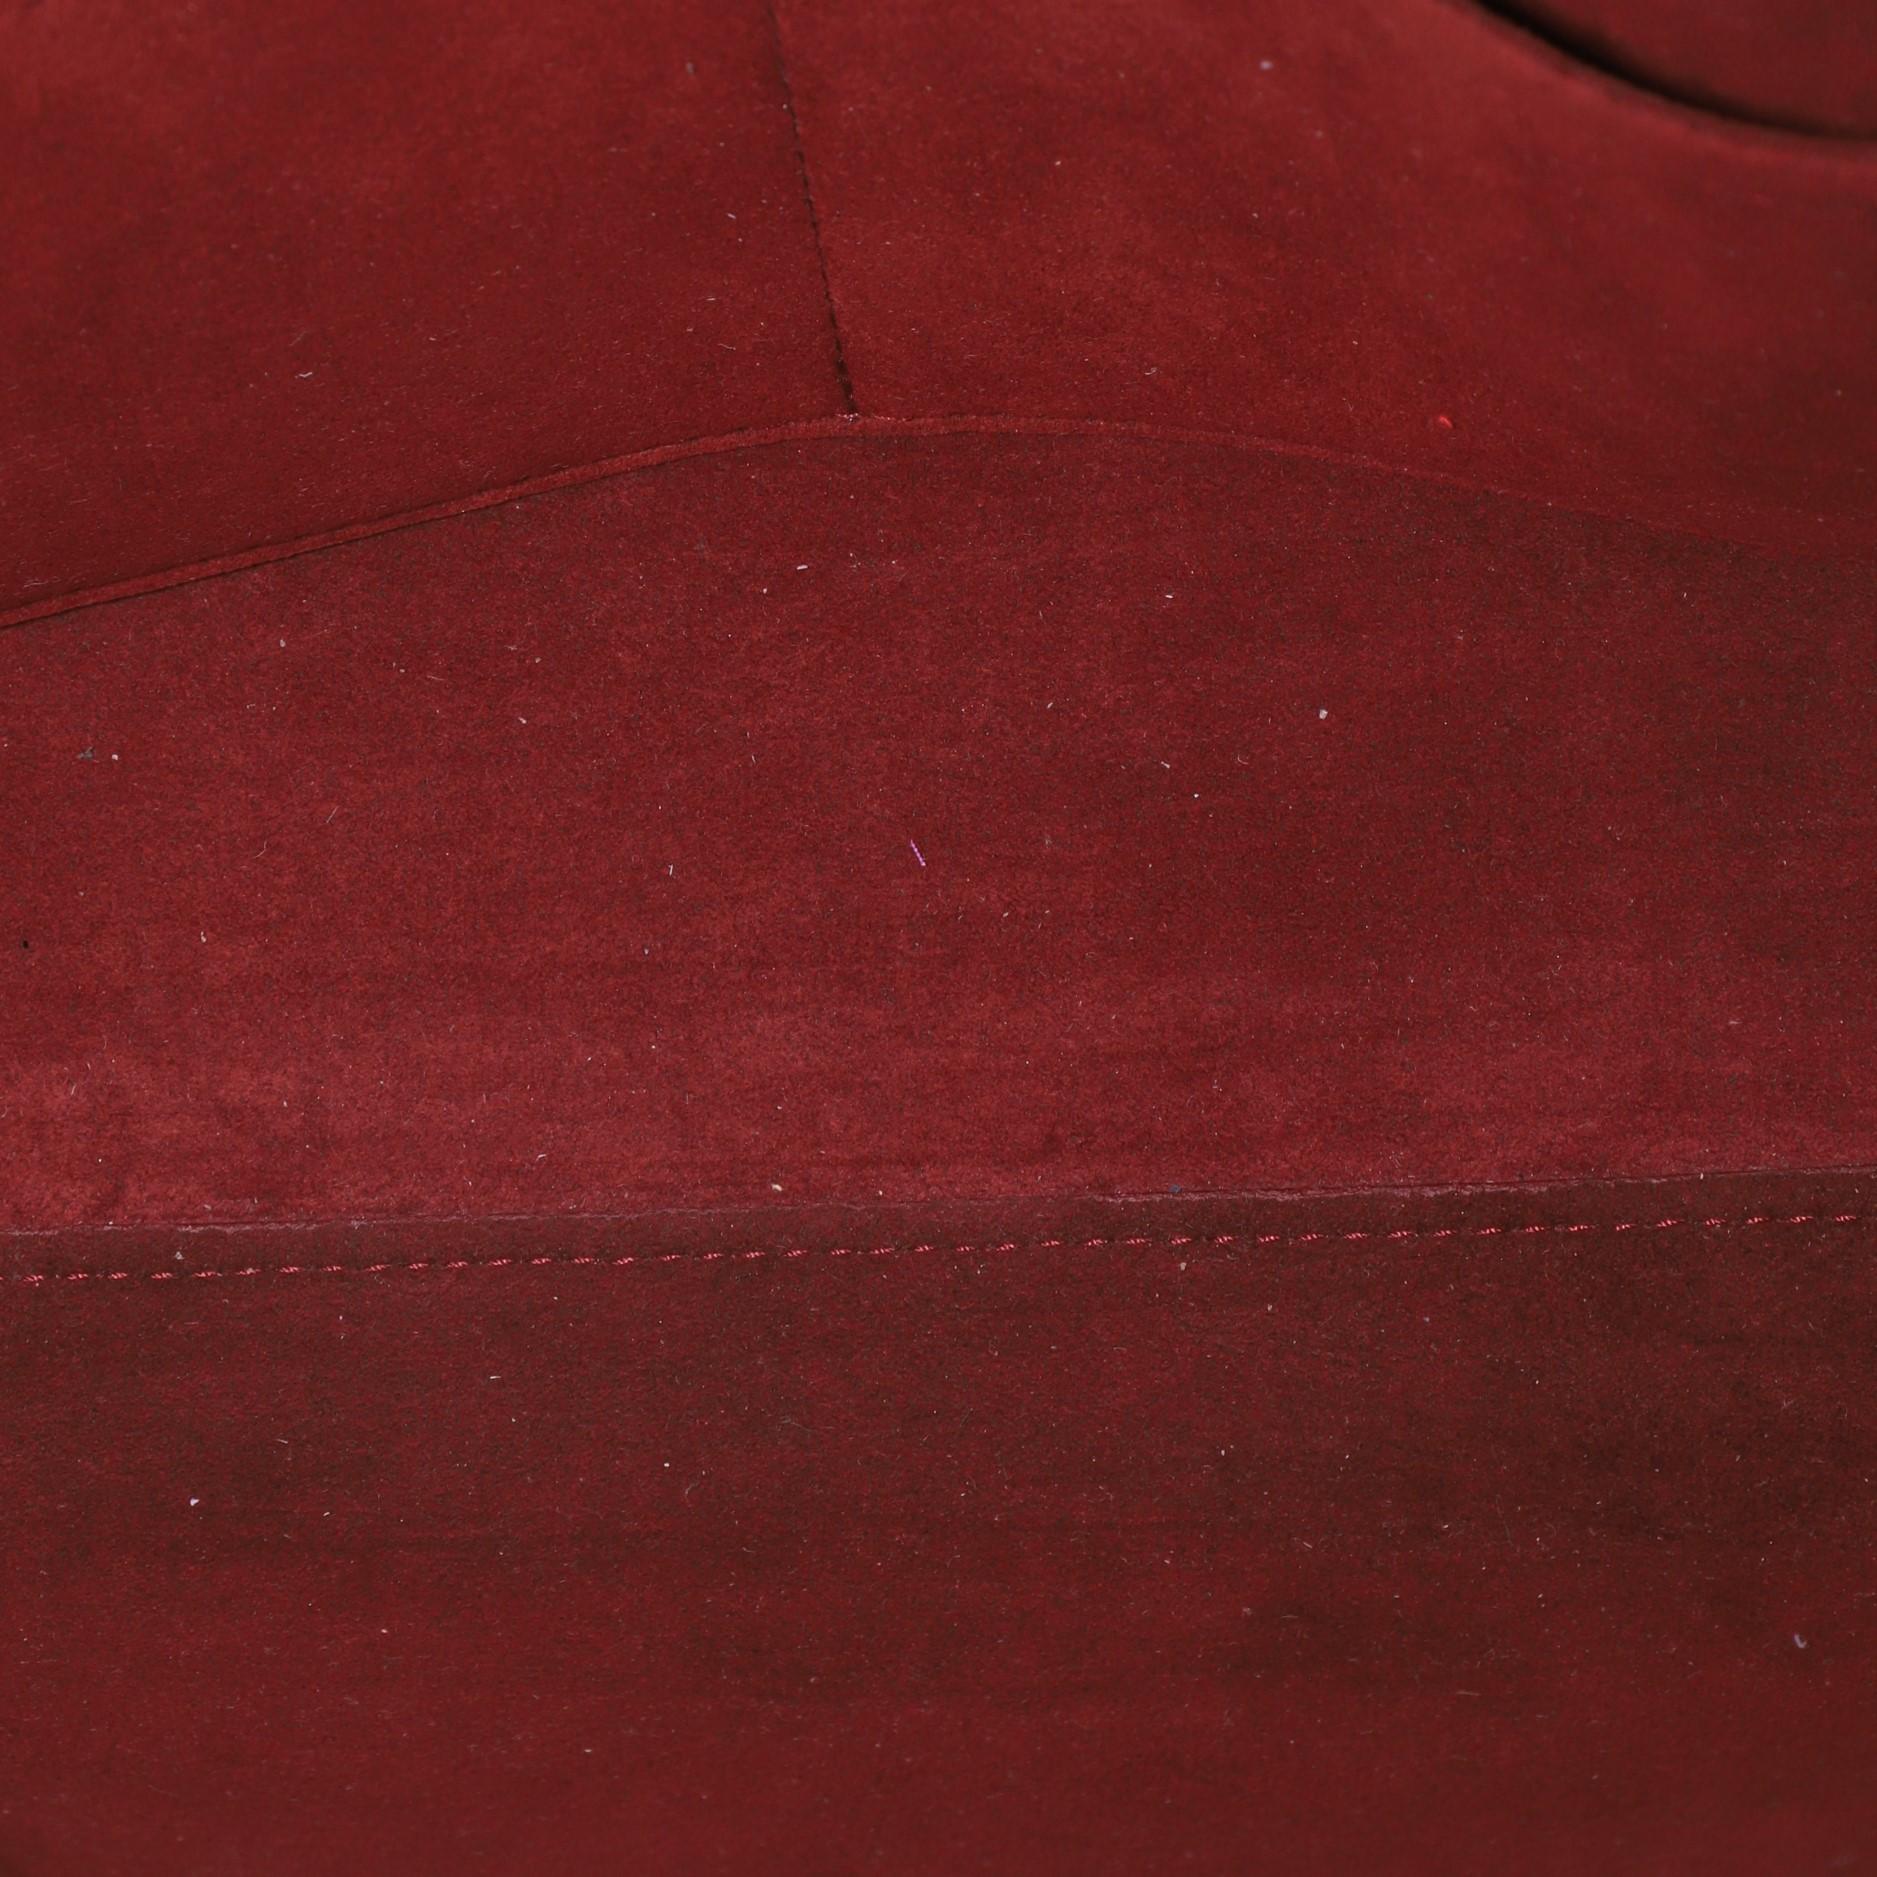 Pink Louis Vuitton Kimono Handbag Monogram Canvas and Leather MM